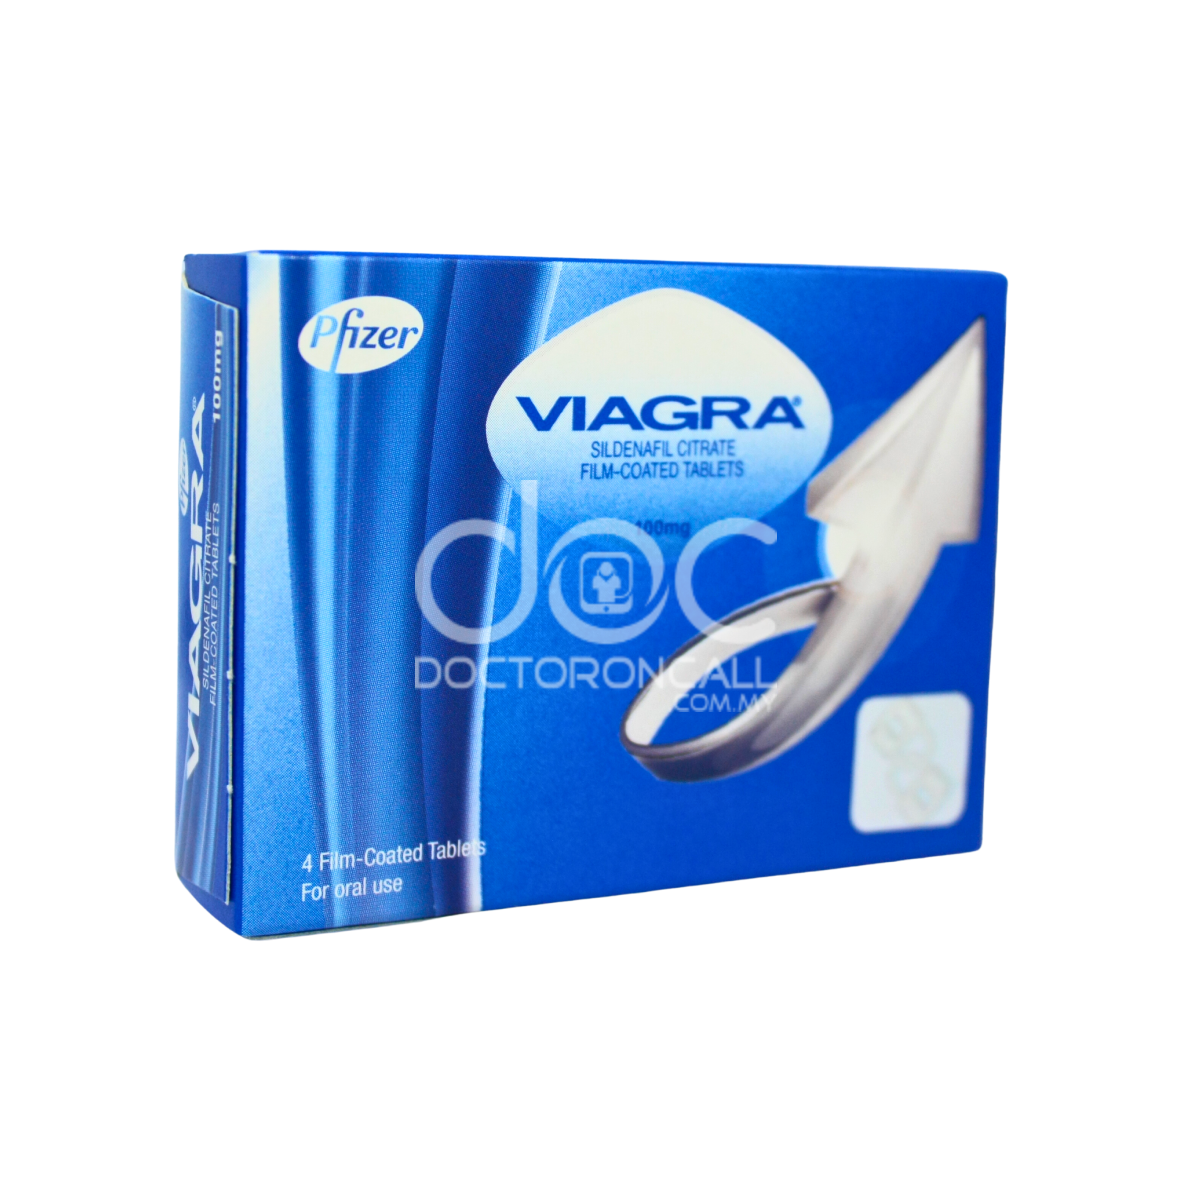 Viagra 100mg Tablet-Kulit zakar mengelupas & gatal